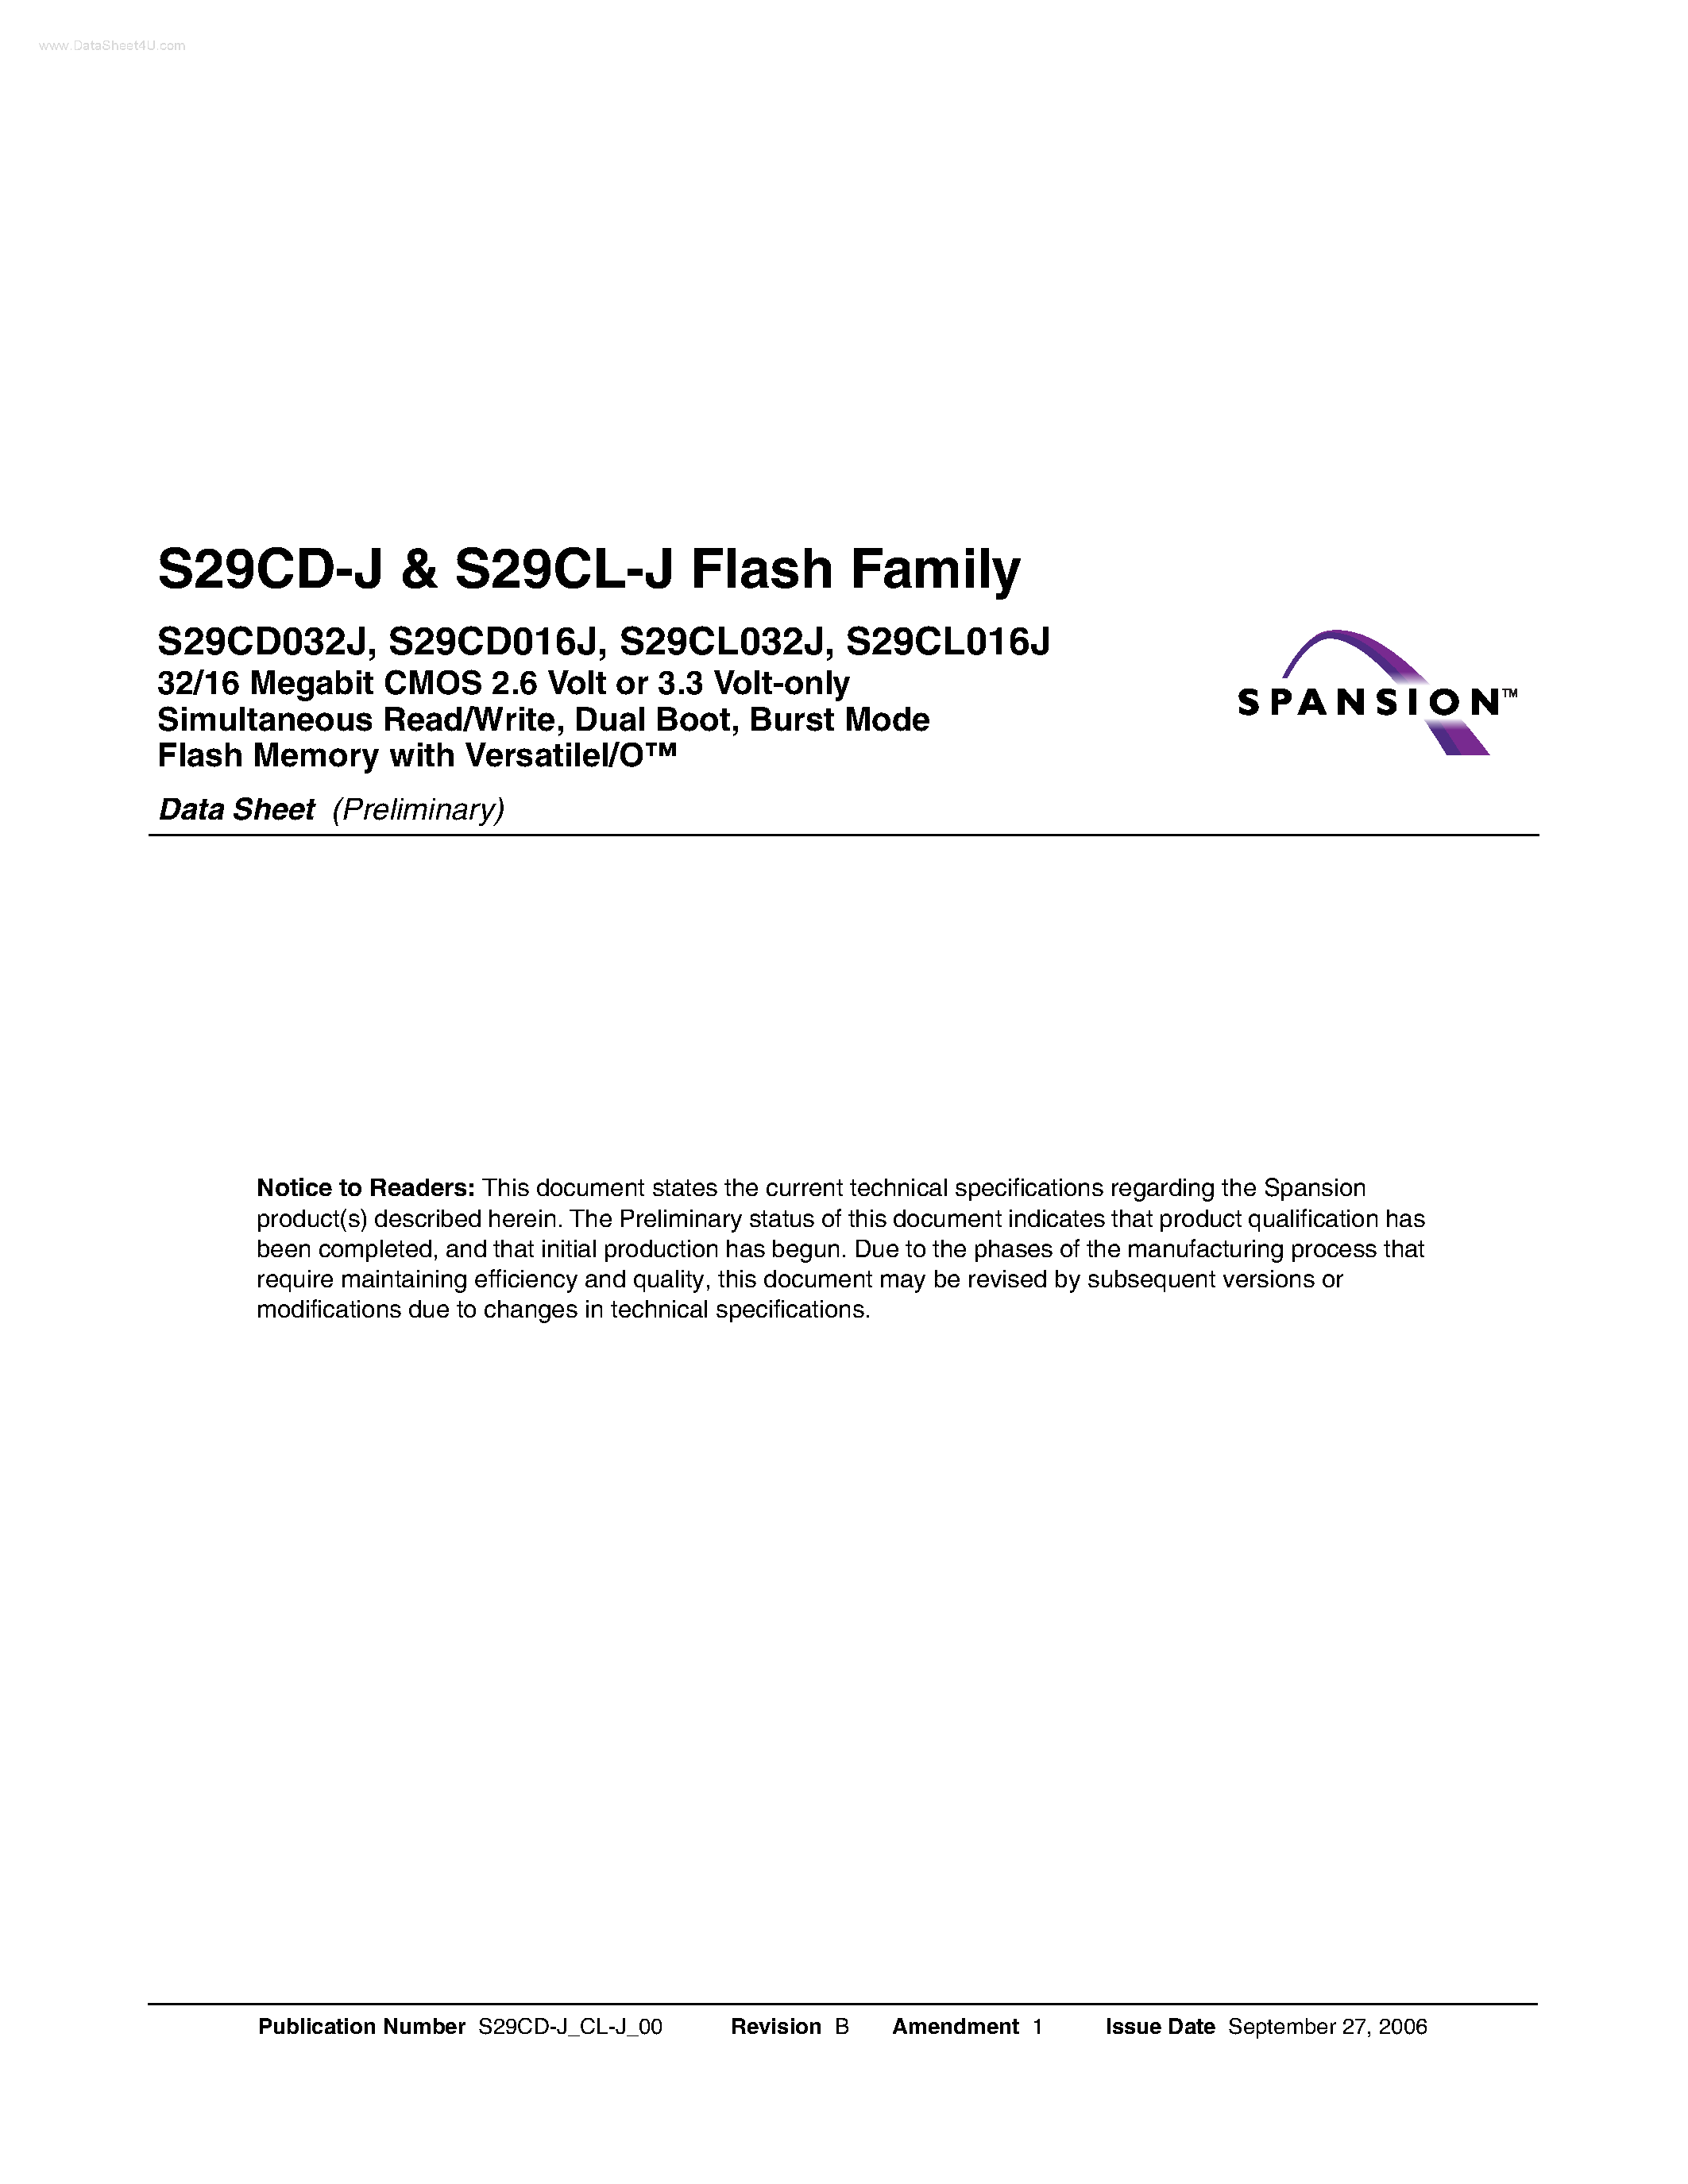 Datasheet S29CD-J - (S29CD-J / S29CL-J) Burst Mode Flash Memory page 1